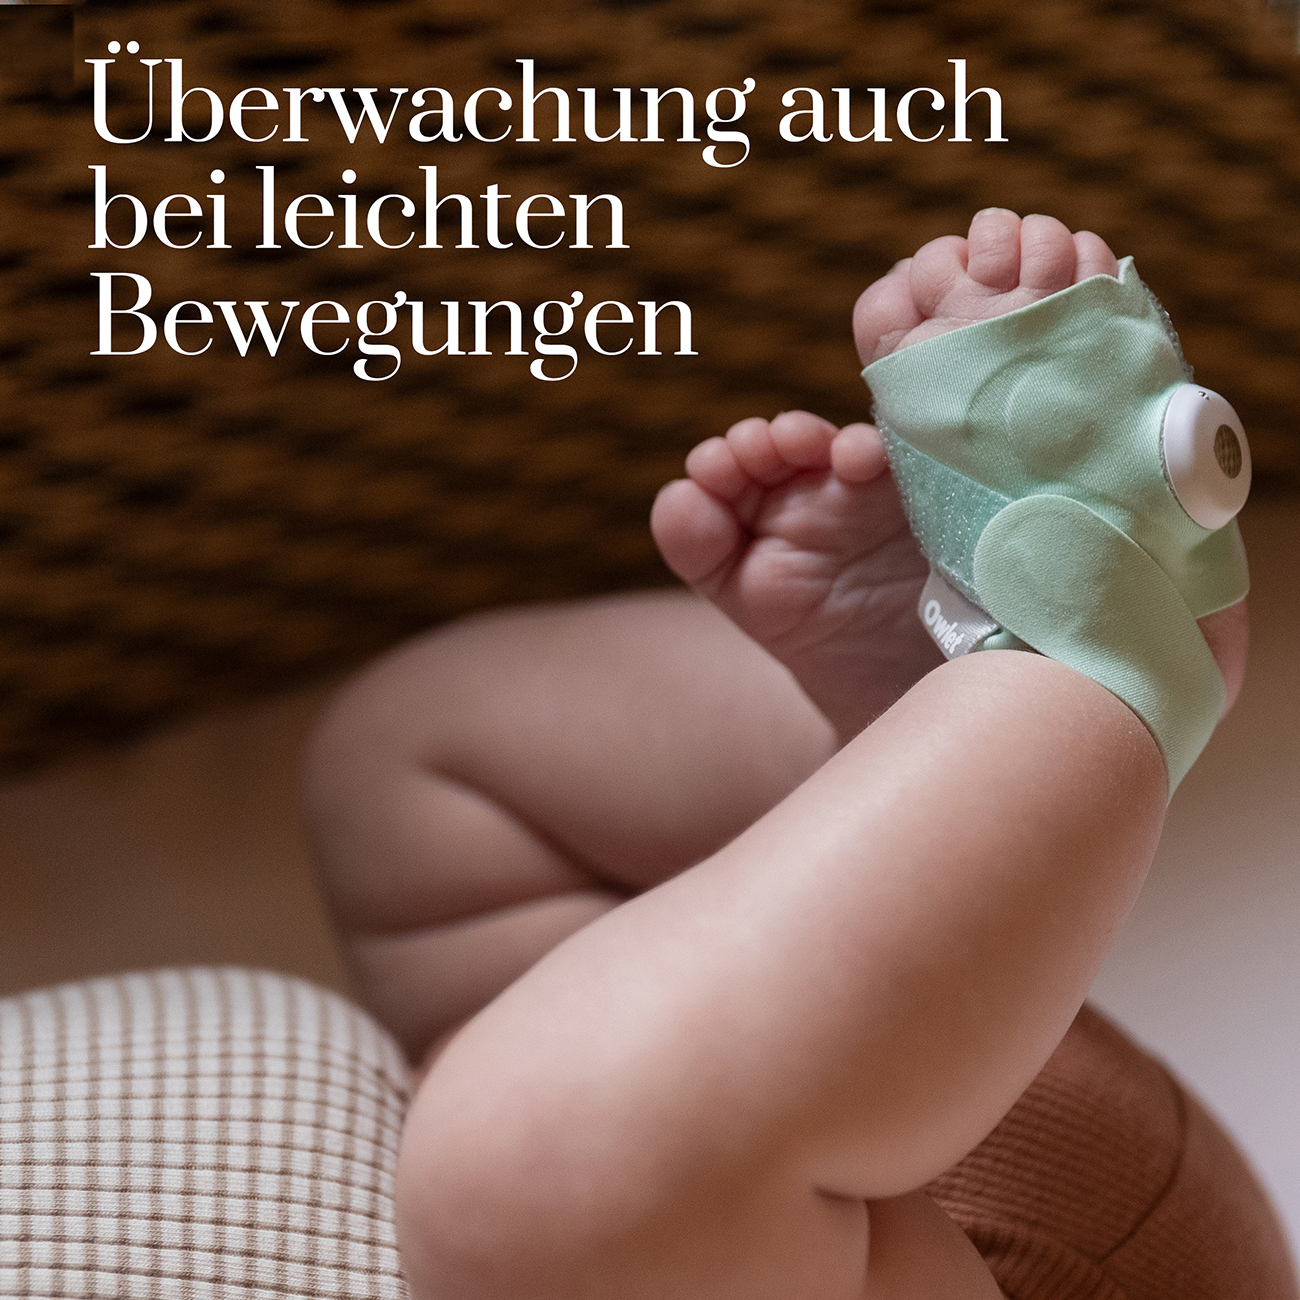 OWLET Baby Sock Smart Monitor